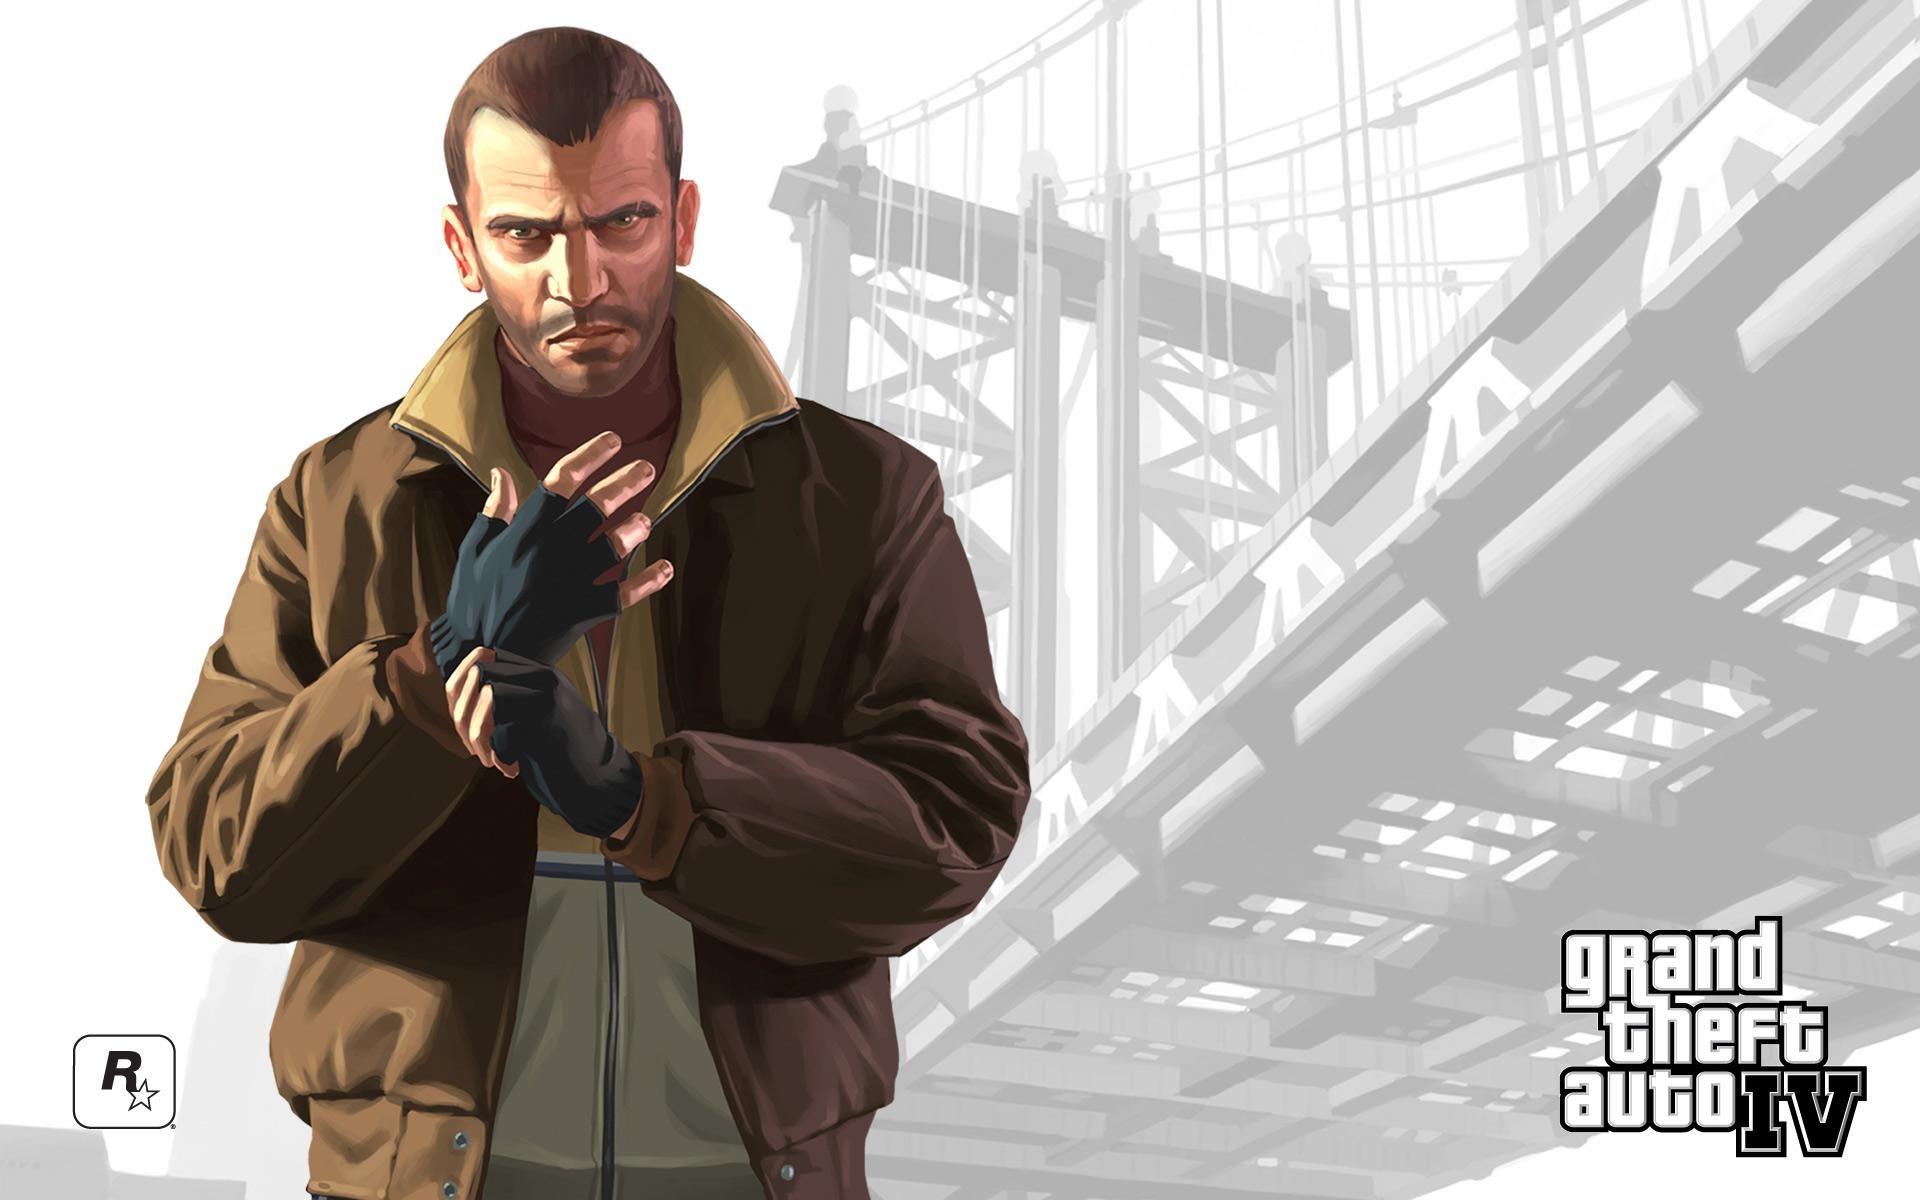 Niko Grand Theft Auto IV Wallpaper